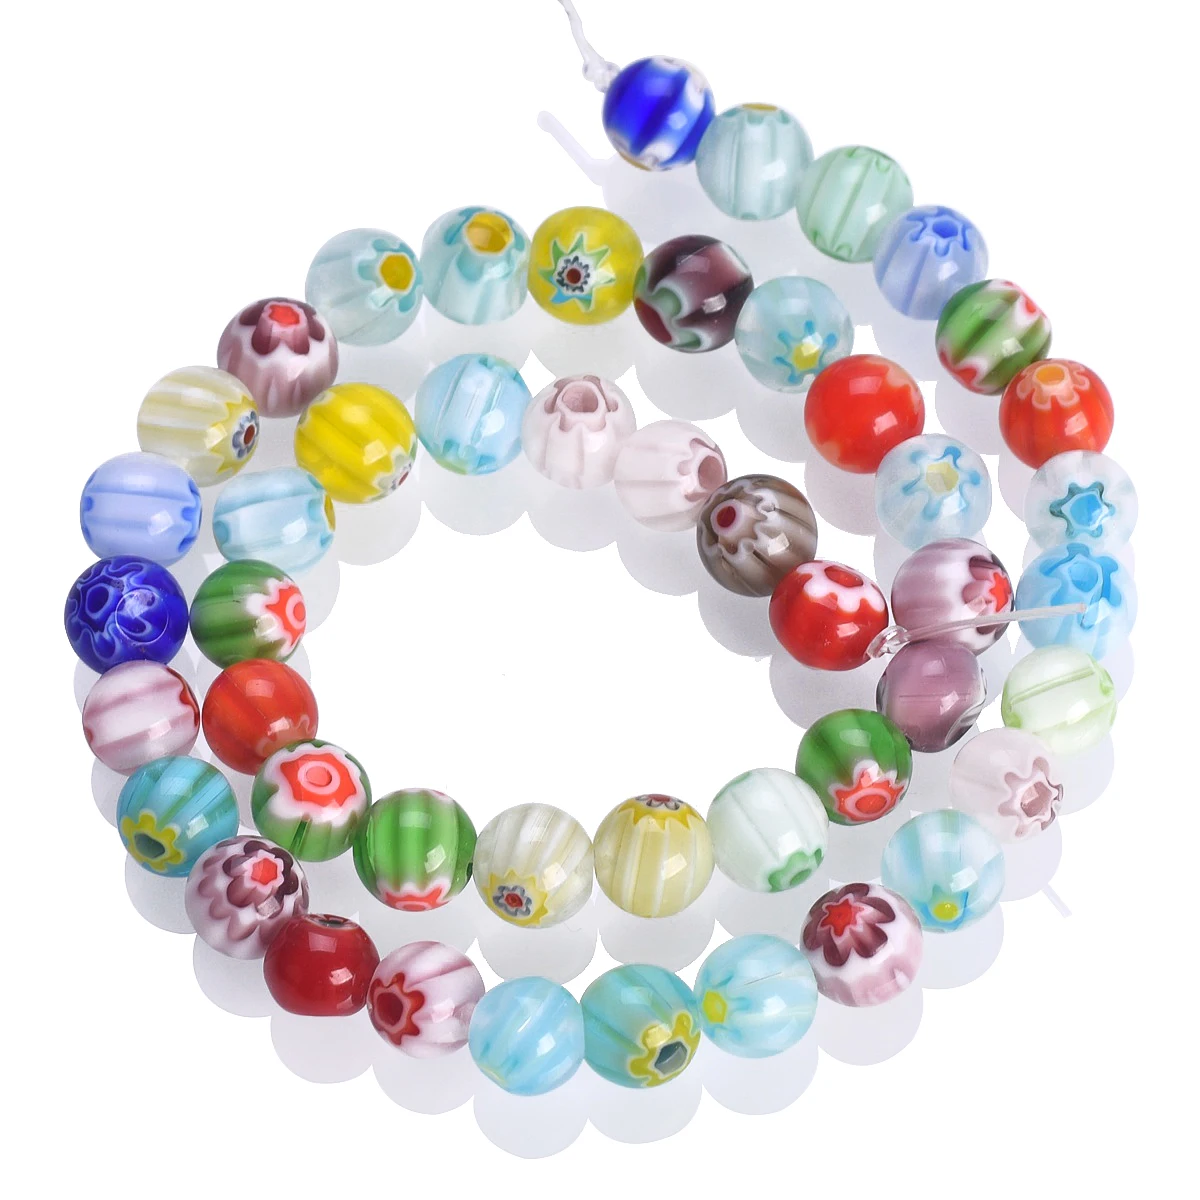 45pcs Flower Pattern Round 8mm Millefiori Lampwork Glass Loose Beads Lot For Jewelry Making DIY Bracelet Findings